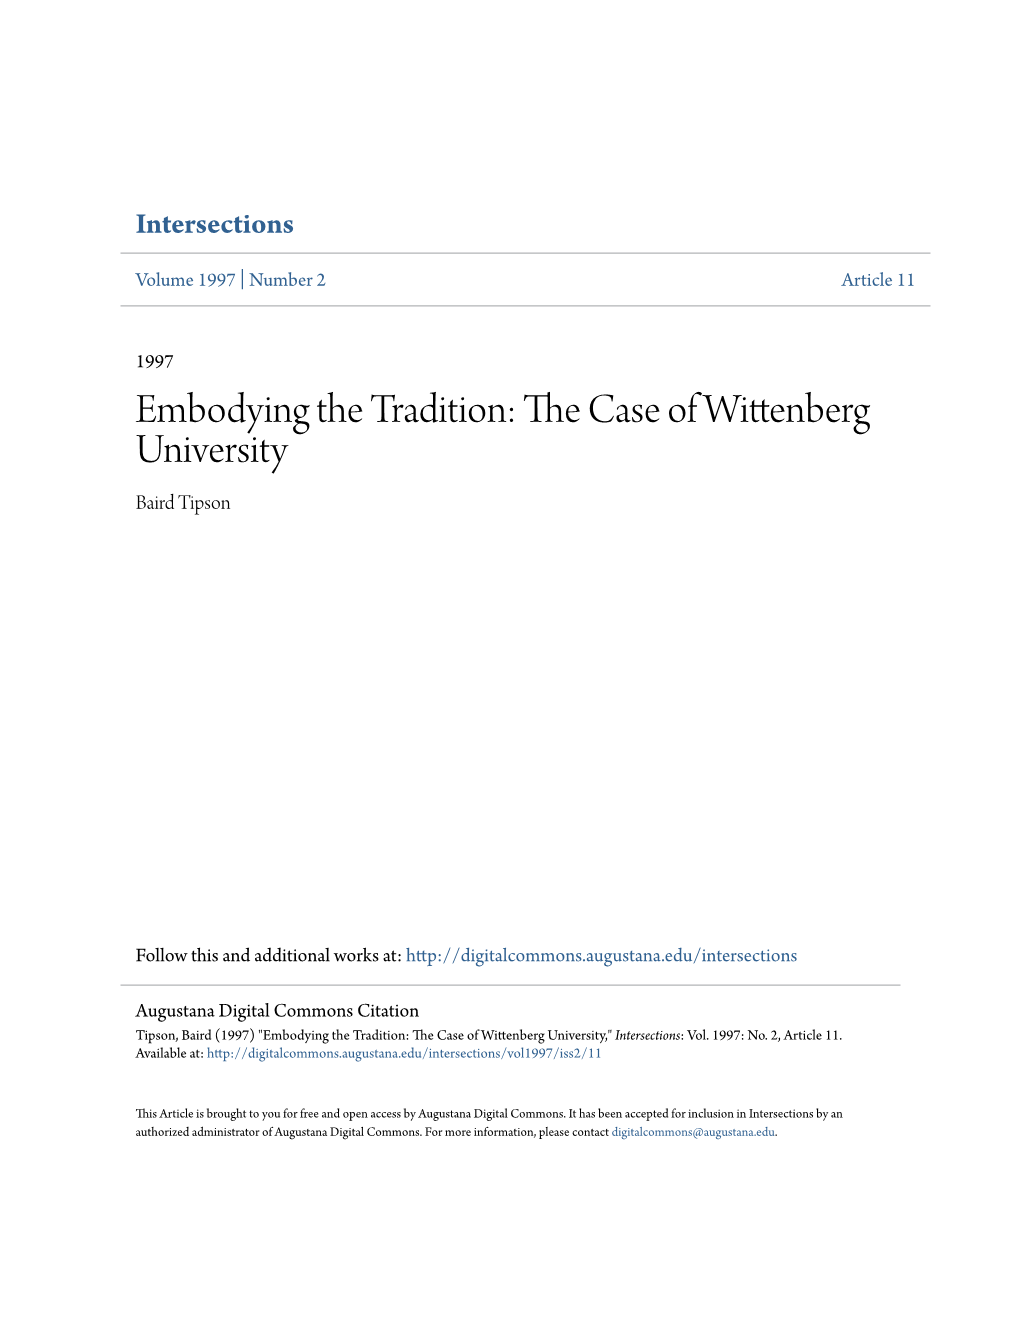 The Case of Wittenberg University